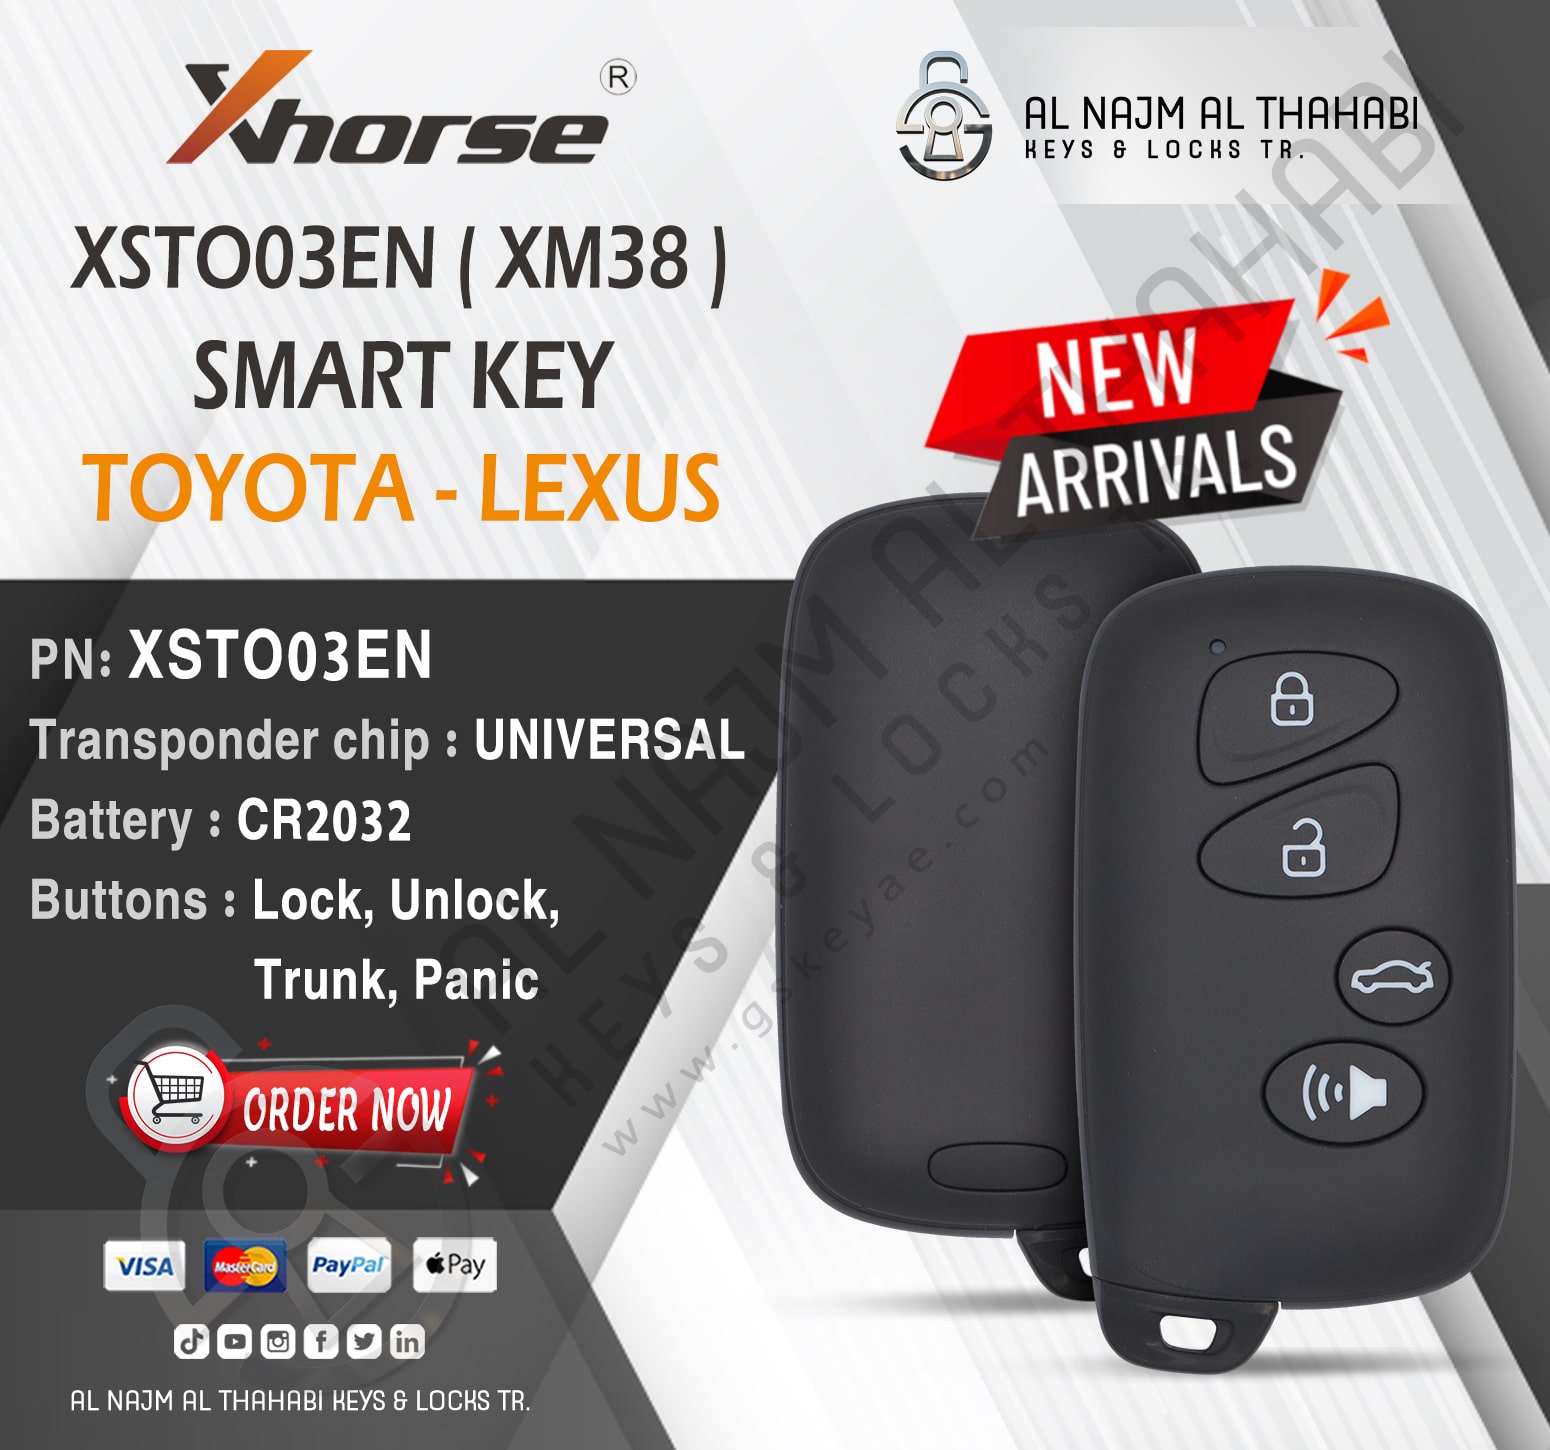 Xhorse XSTO03EN XM38 Smart Key 4D 8A 4A All in One For Toyota Lexus